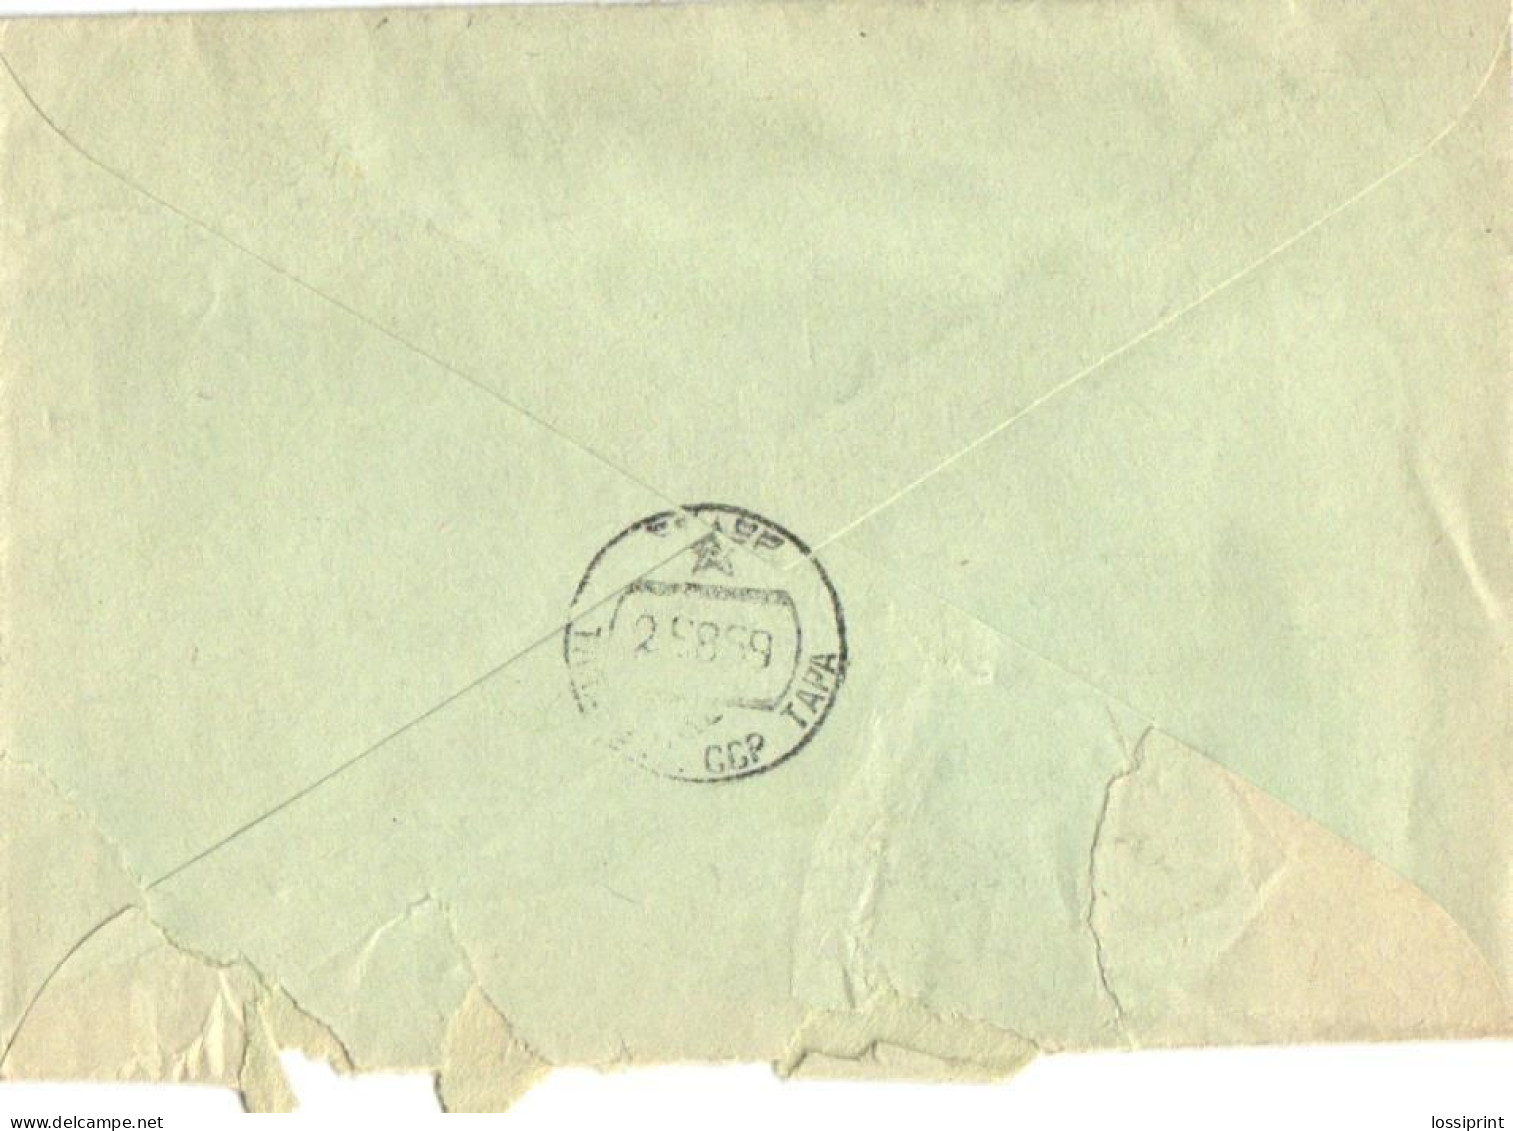 Soviet Union:USSR:Estonia:Registered Tapa Cancellation, 10 Copicks Soldier, 1969 - Briefe U. Dokumente